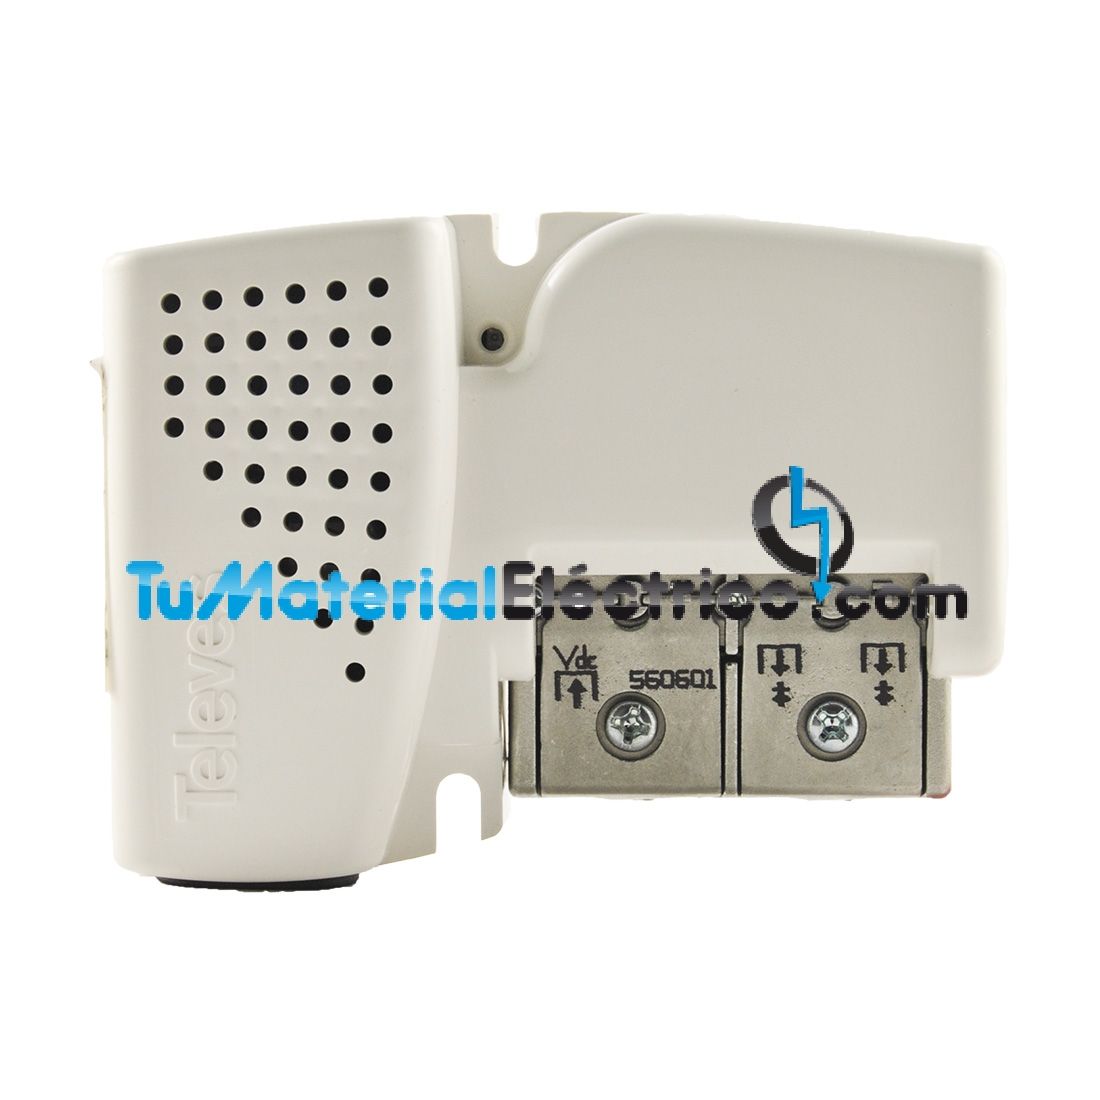 Amplificador de vivienda PicoKom TV+SAT 2 entradas VHF/UHF/FI Televes 560601